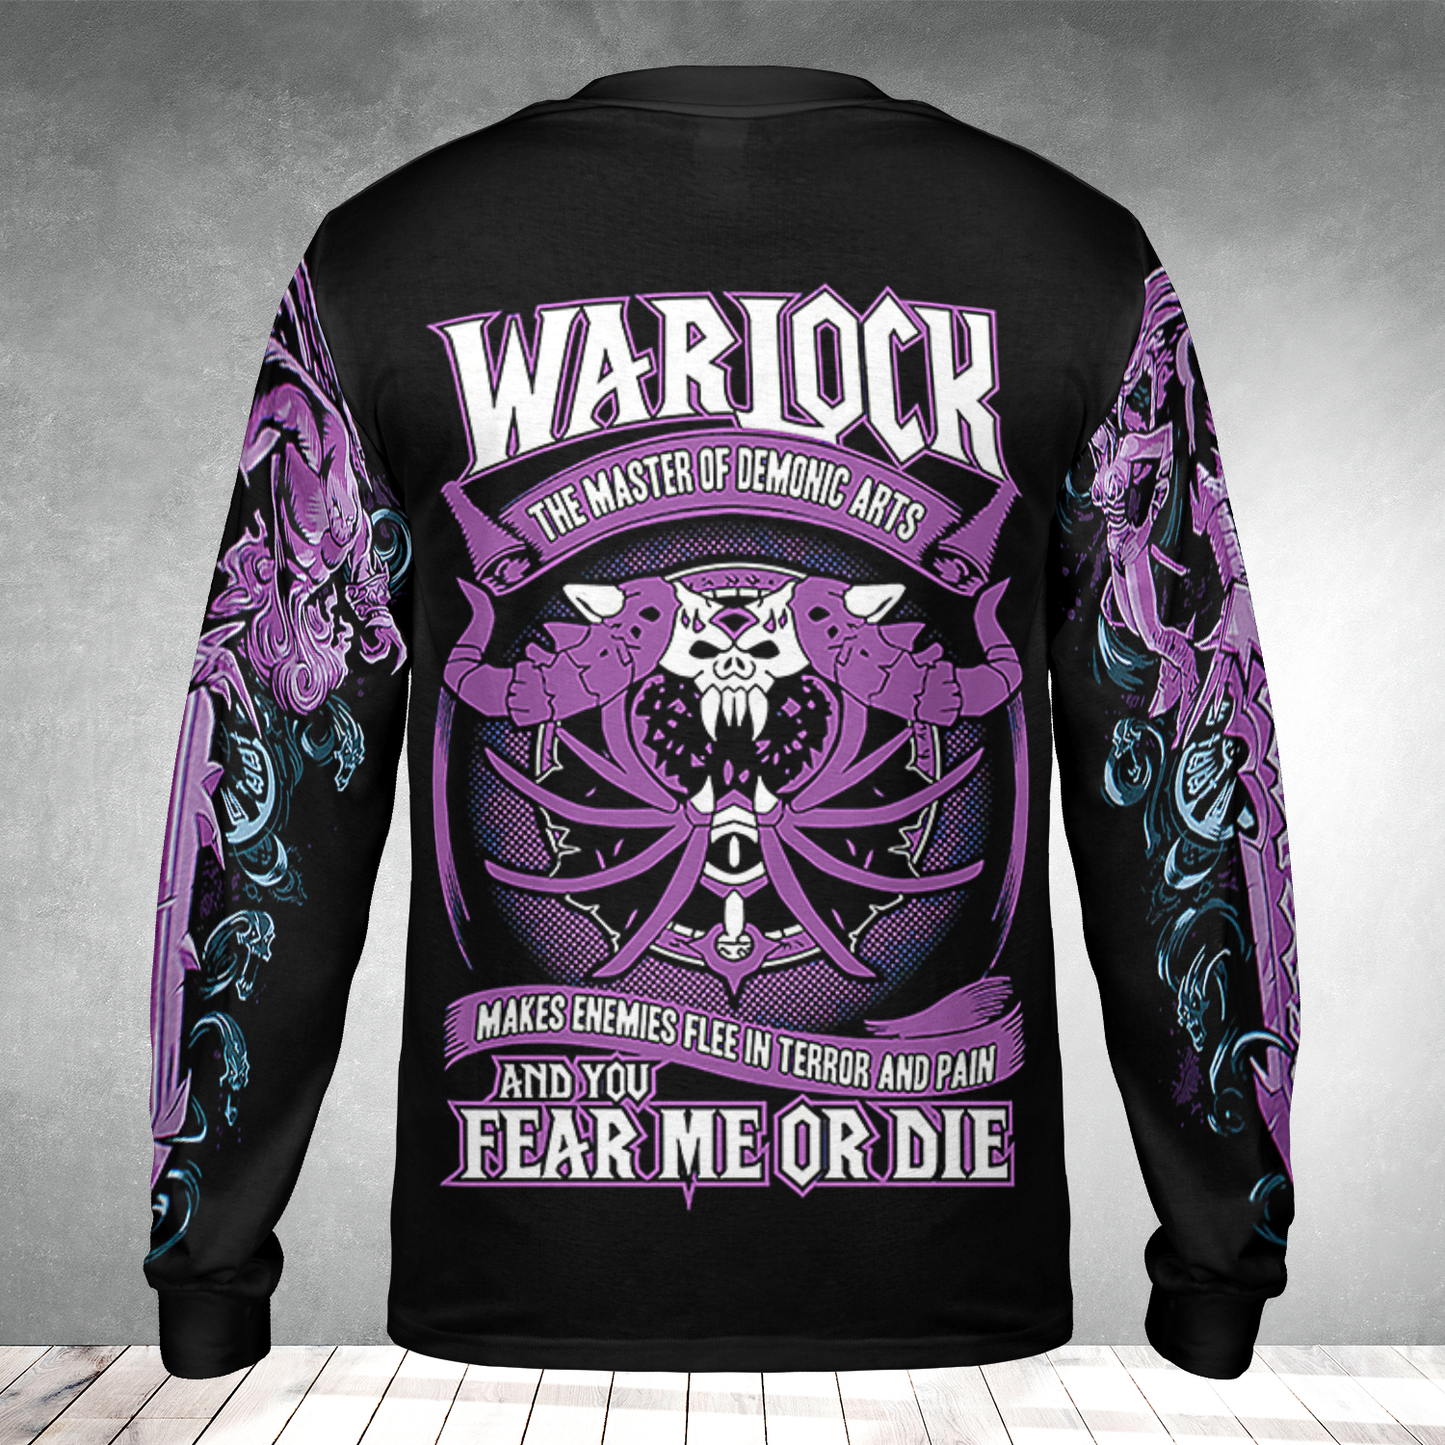 Warlock Class Color Wow AOP Long Sleeve Shirt